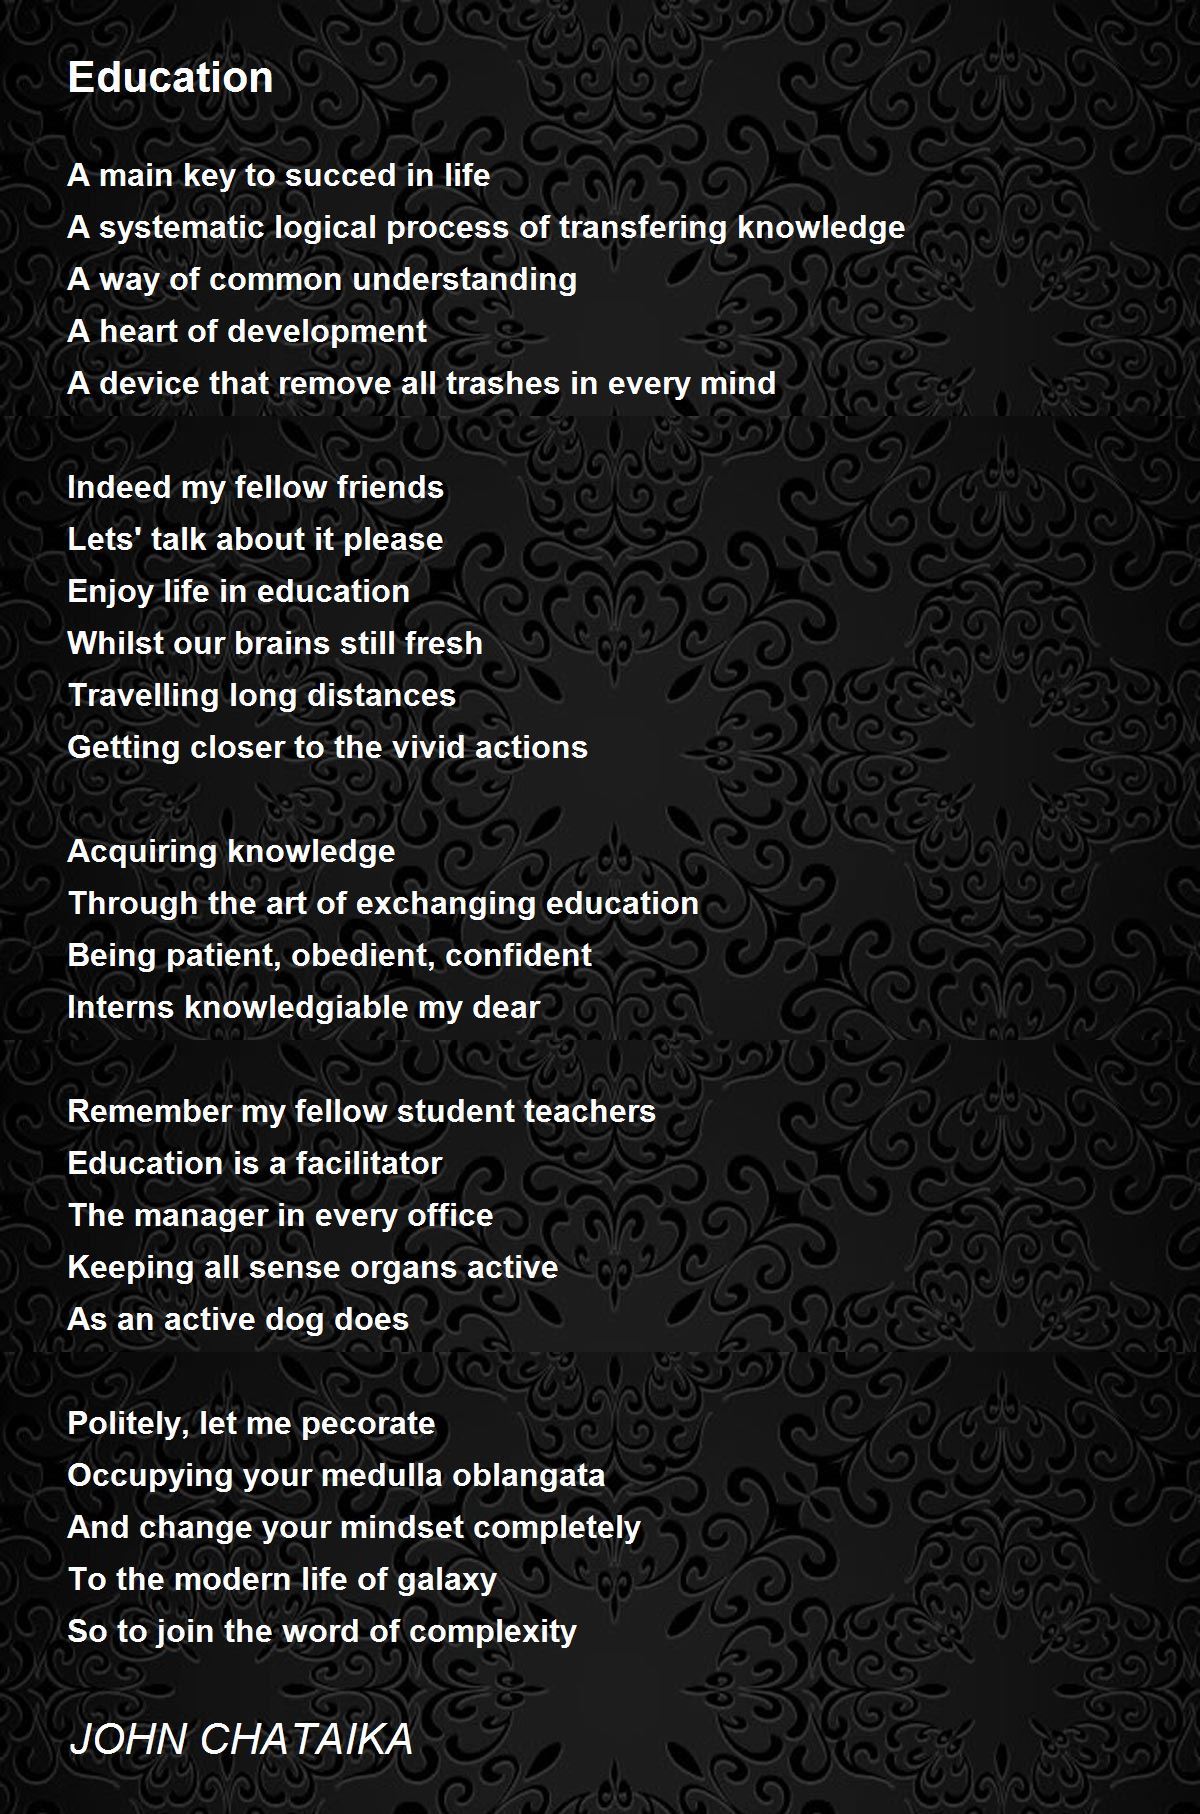 Education by JOHN CHATAIKA - Education Poem